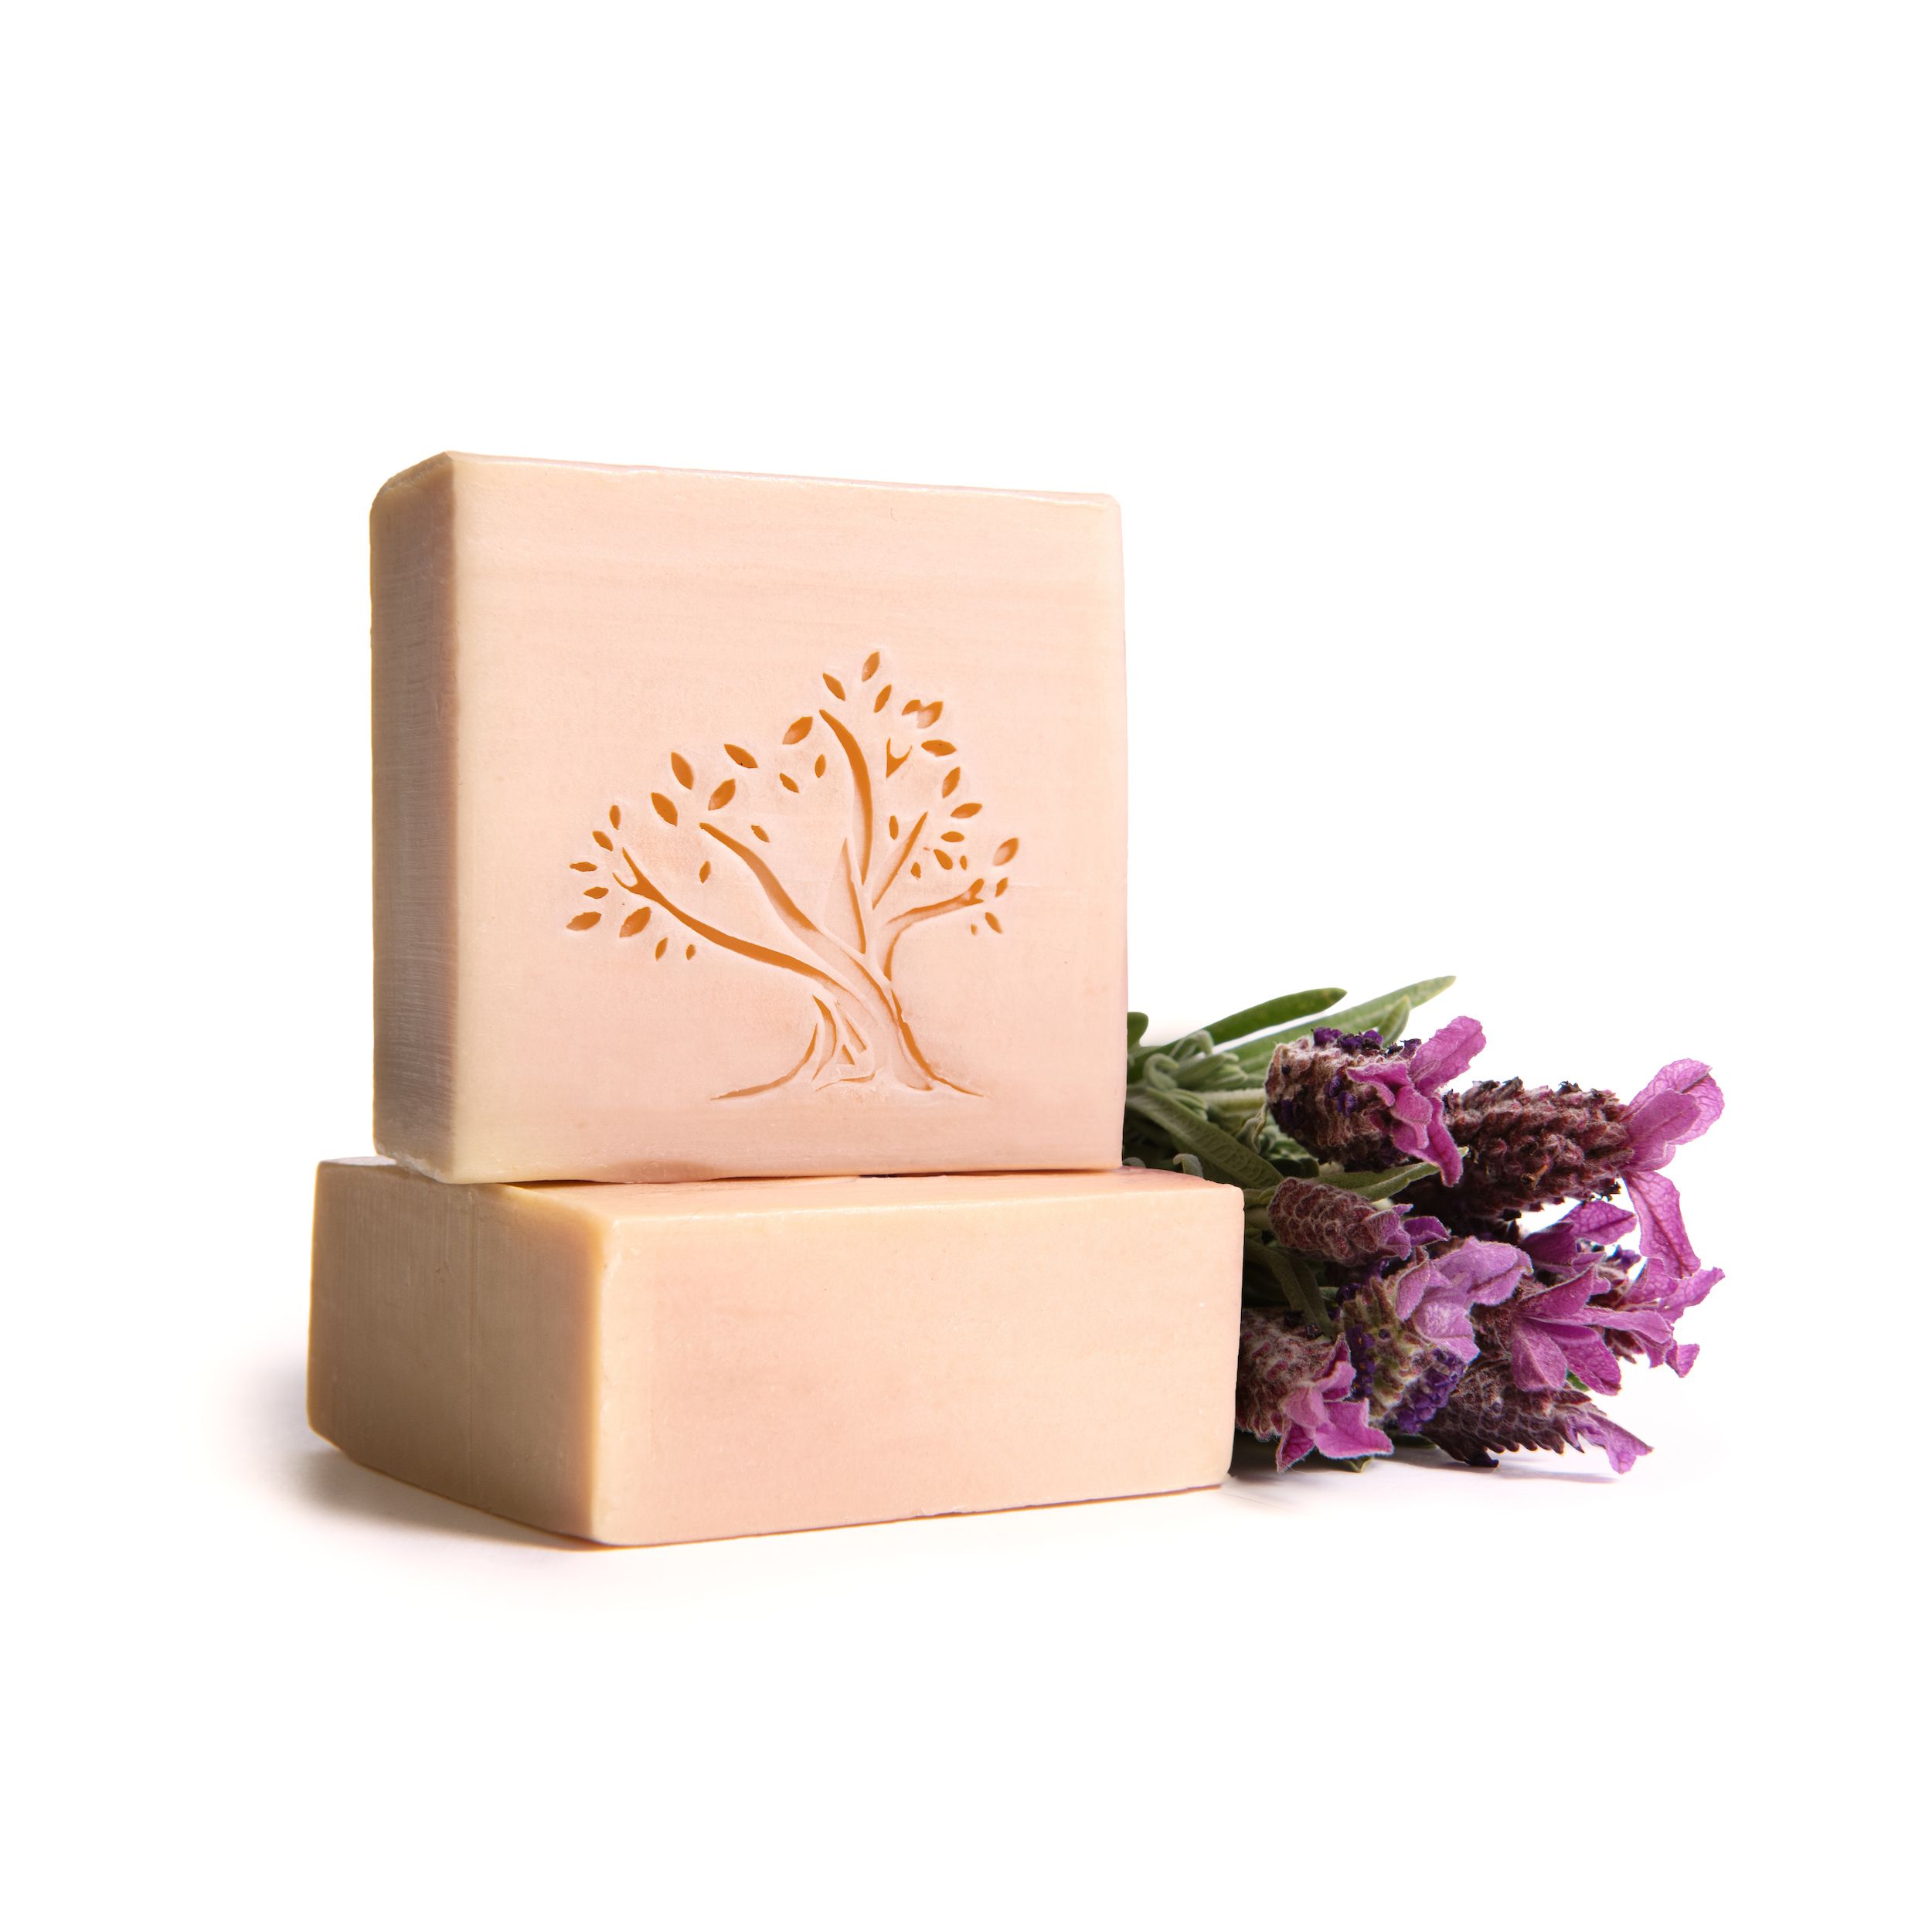 Le Joyau d’Olive - Luxury Pure Olive Oil Soap - Natural Handmade Bar for Face & Body - 1-Pack – Lavender Oil bath bar